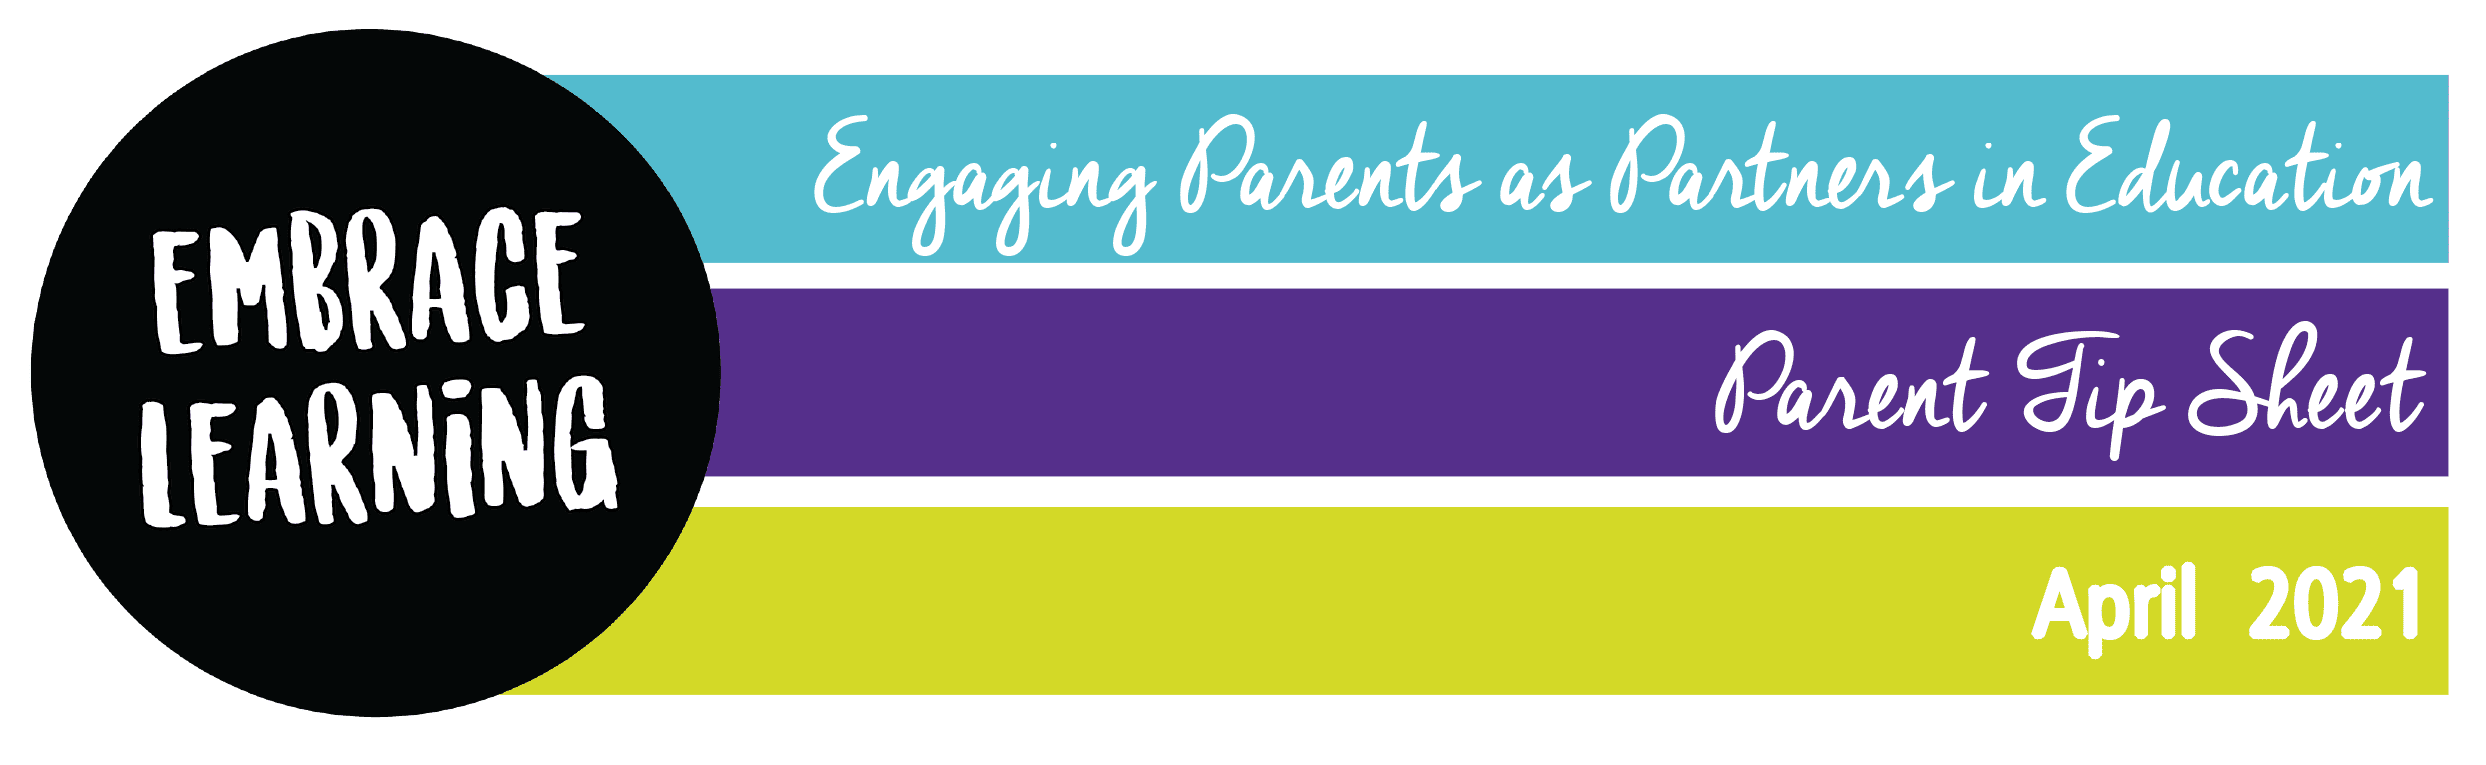 Engaging parents as partners in education. Parent tip sheet, April 2021